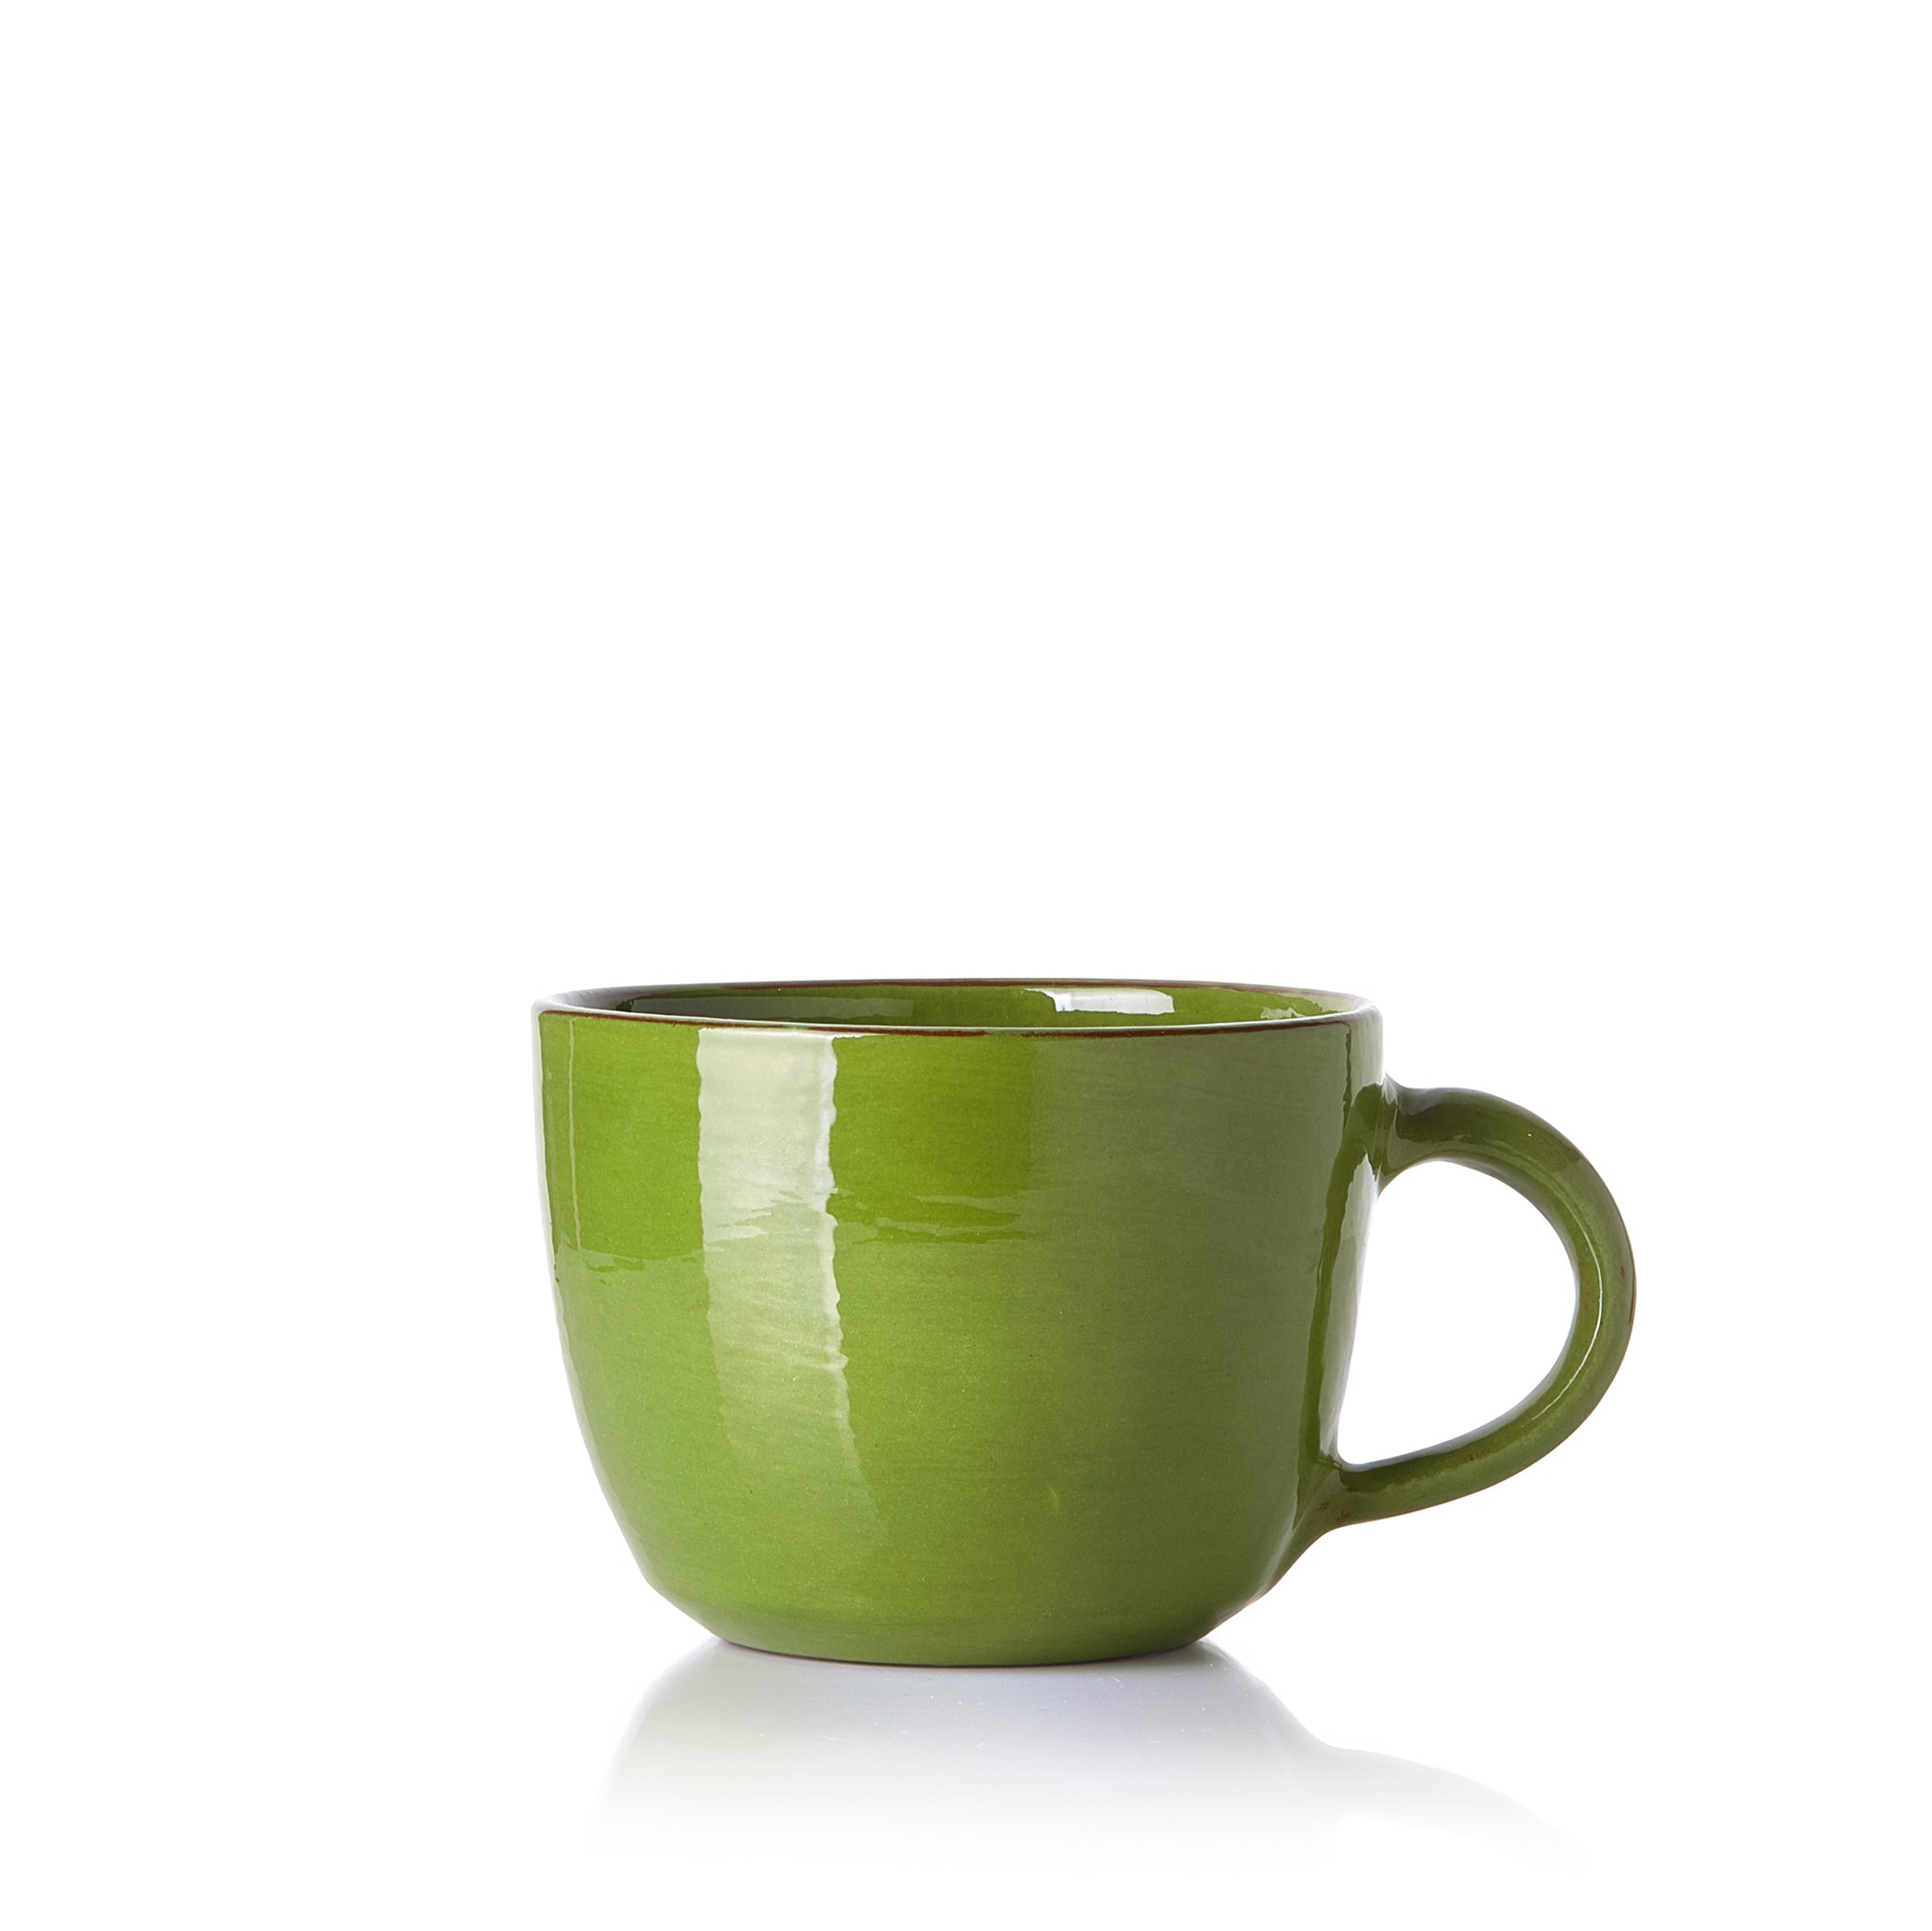 Hot Chocolate Mug in Green